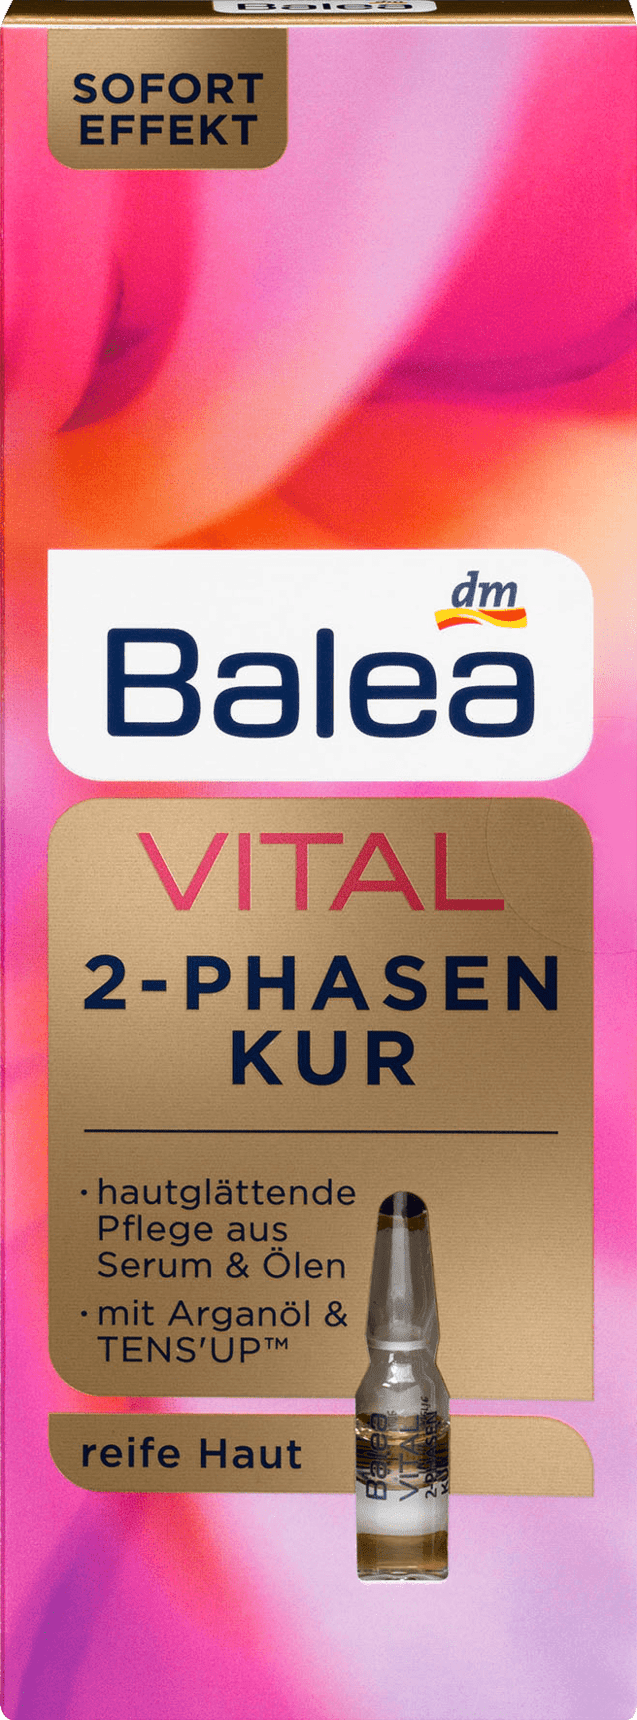 Balea Vital 2-Phasen KUR (1ML. X 7PCS.)